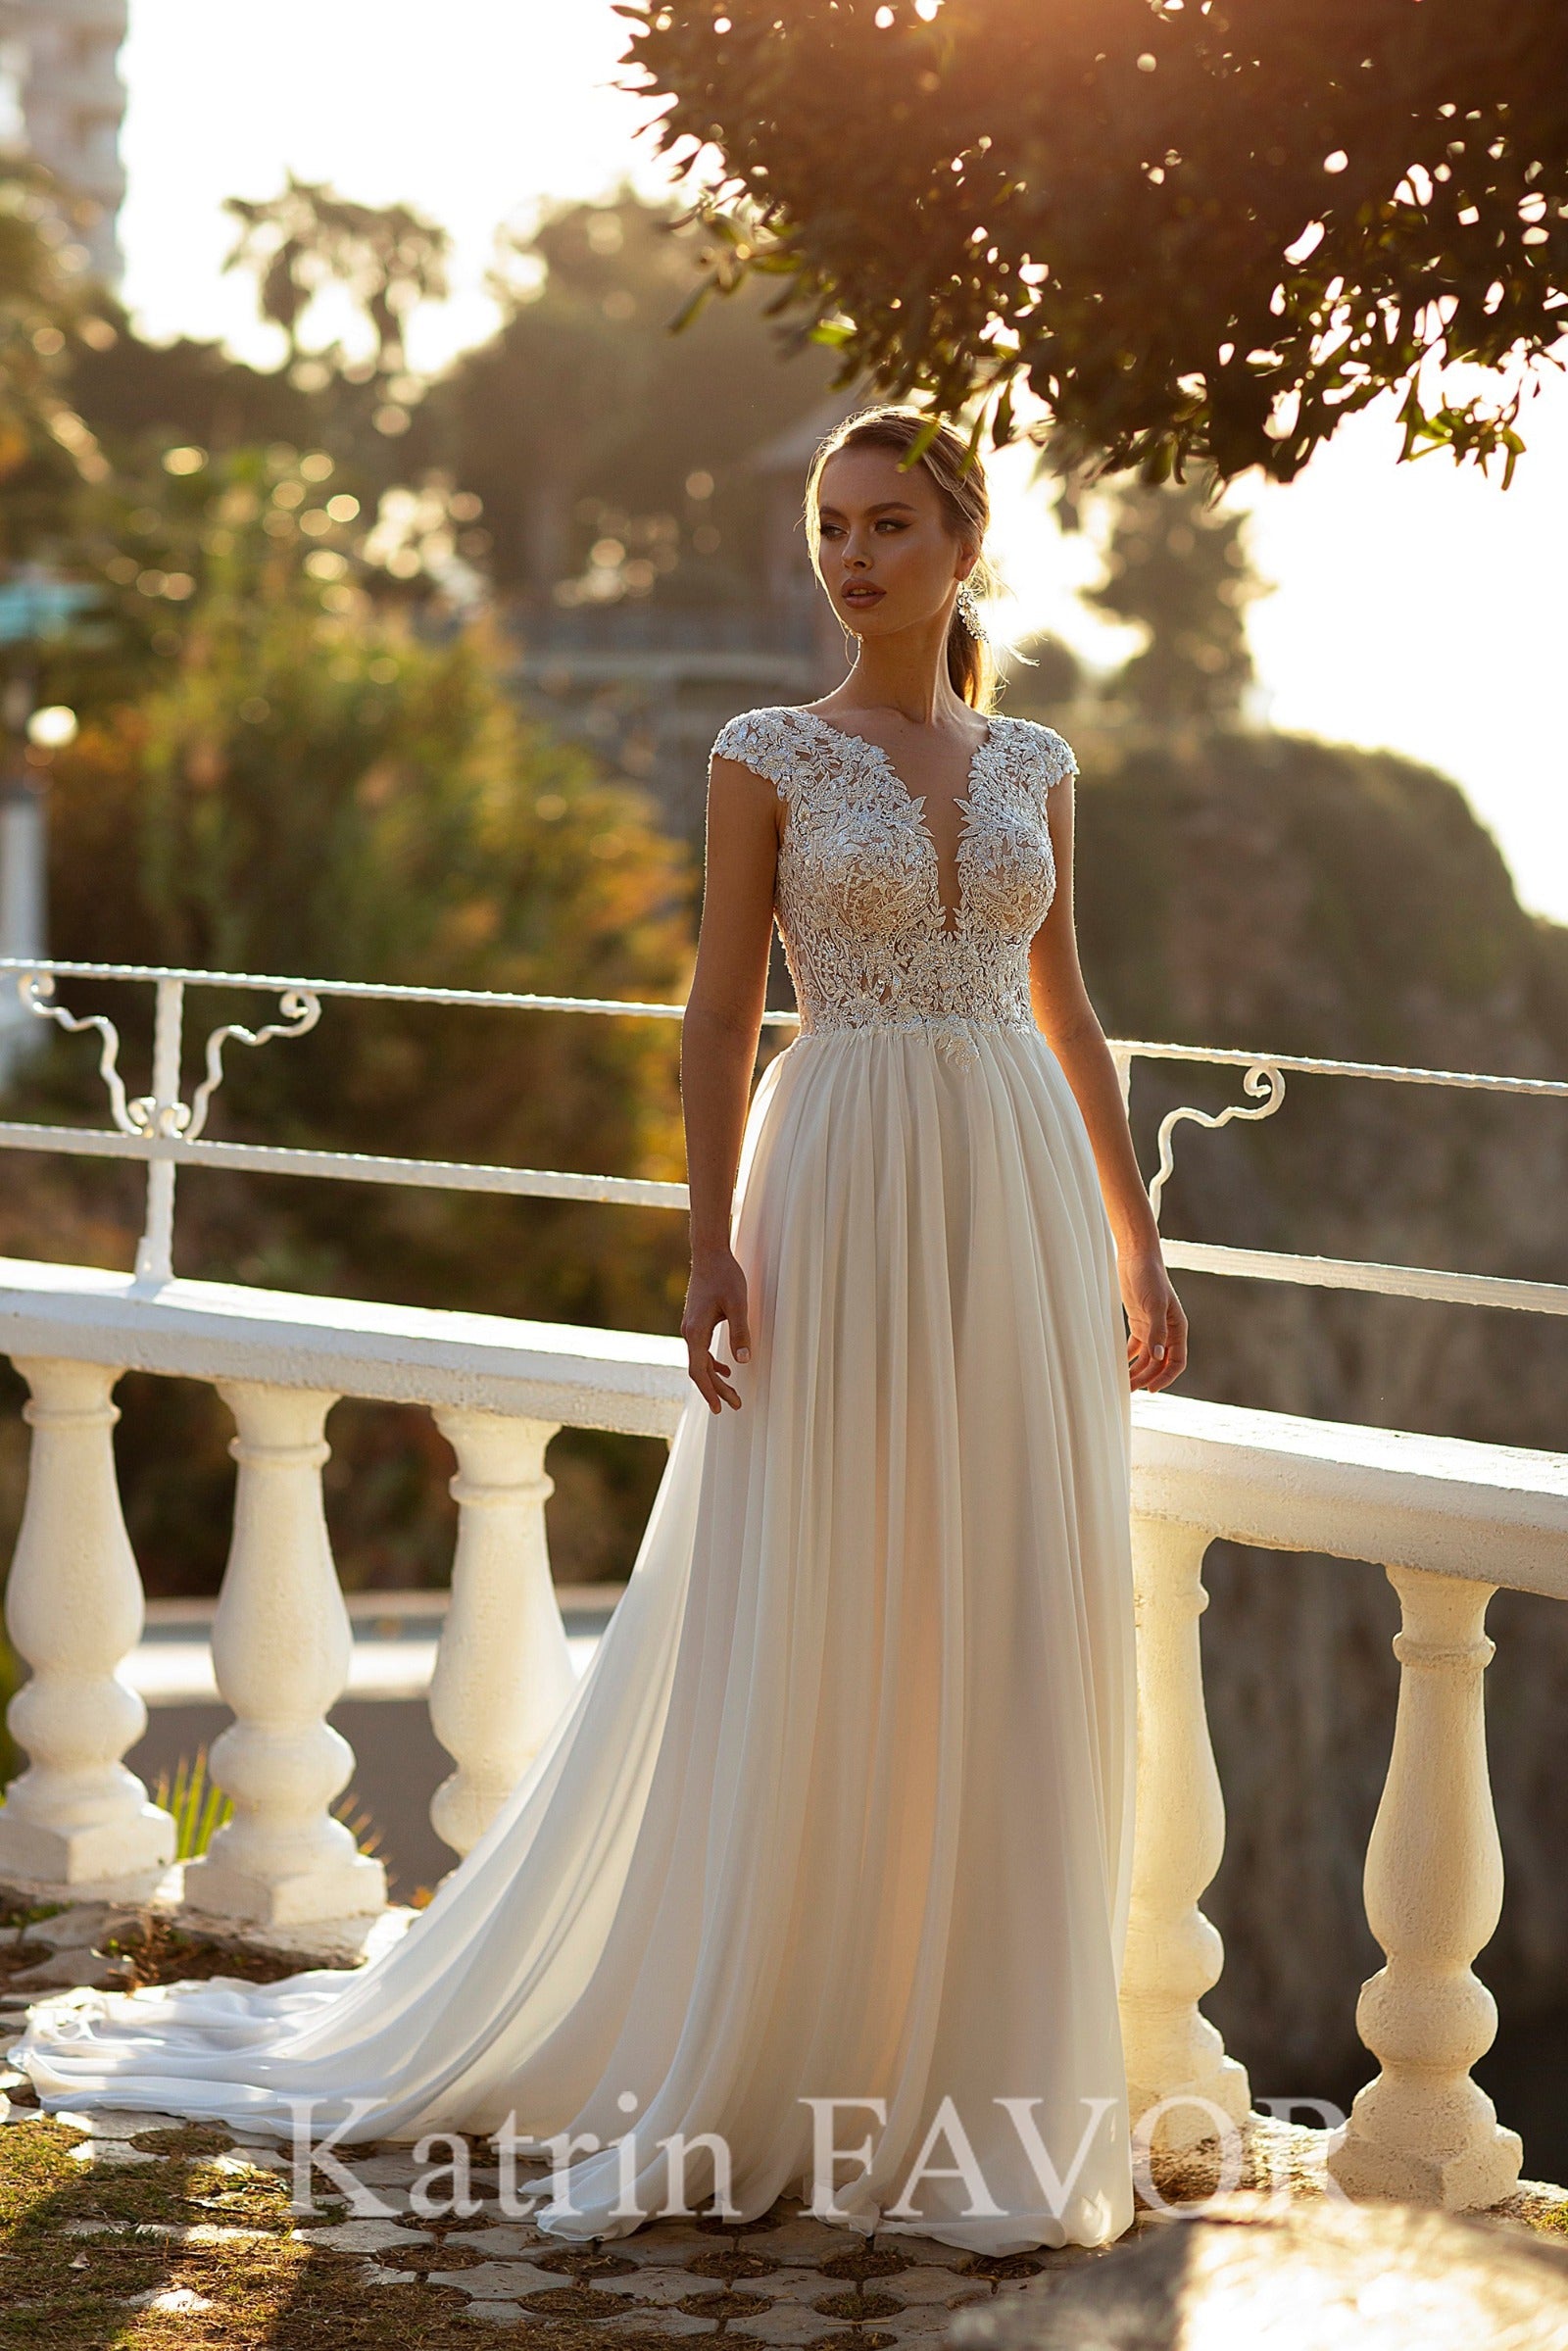 KatrinFAVORboutique-Chiffon a-line rustic wedding dress